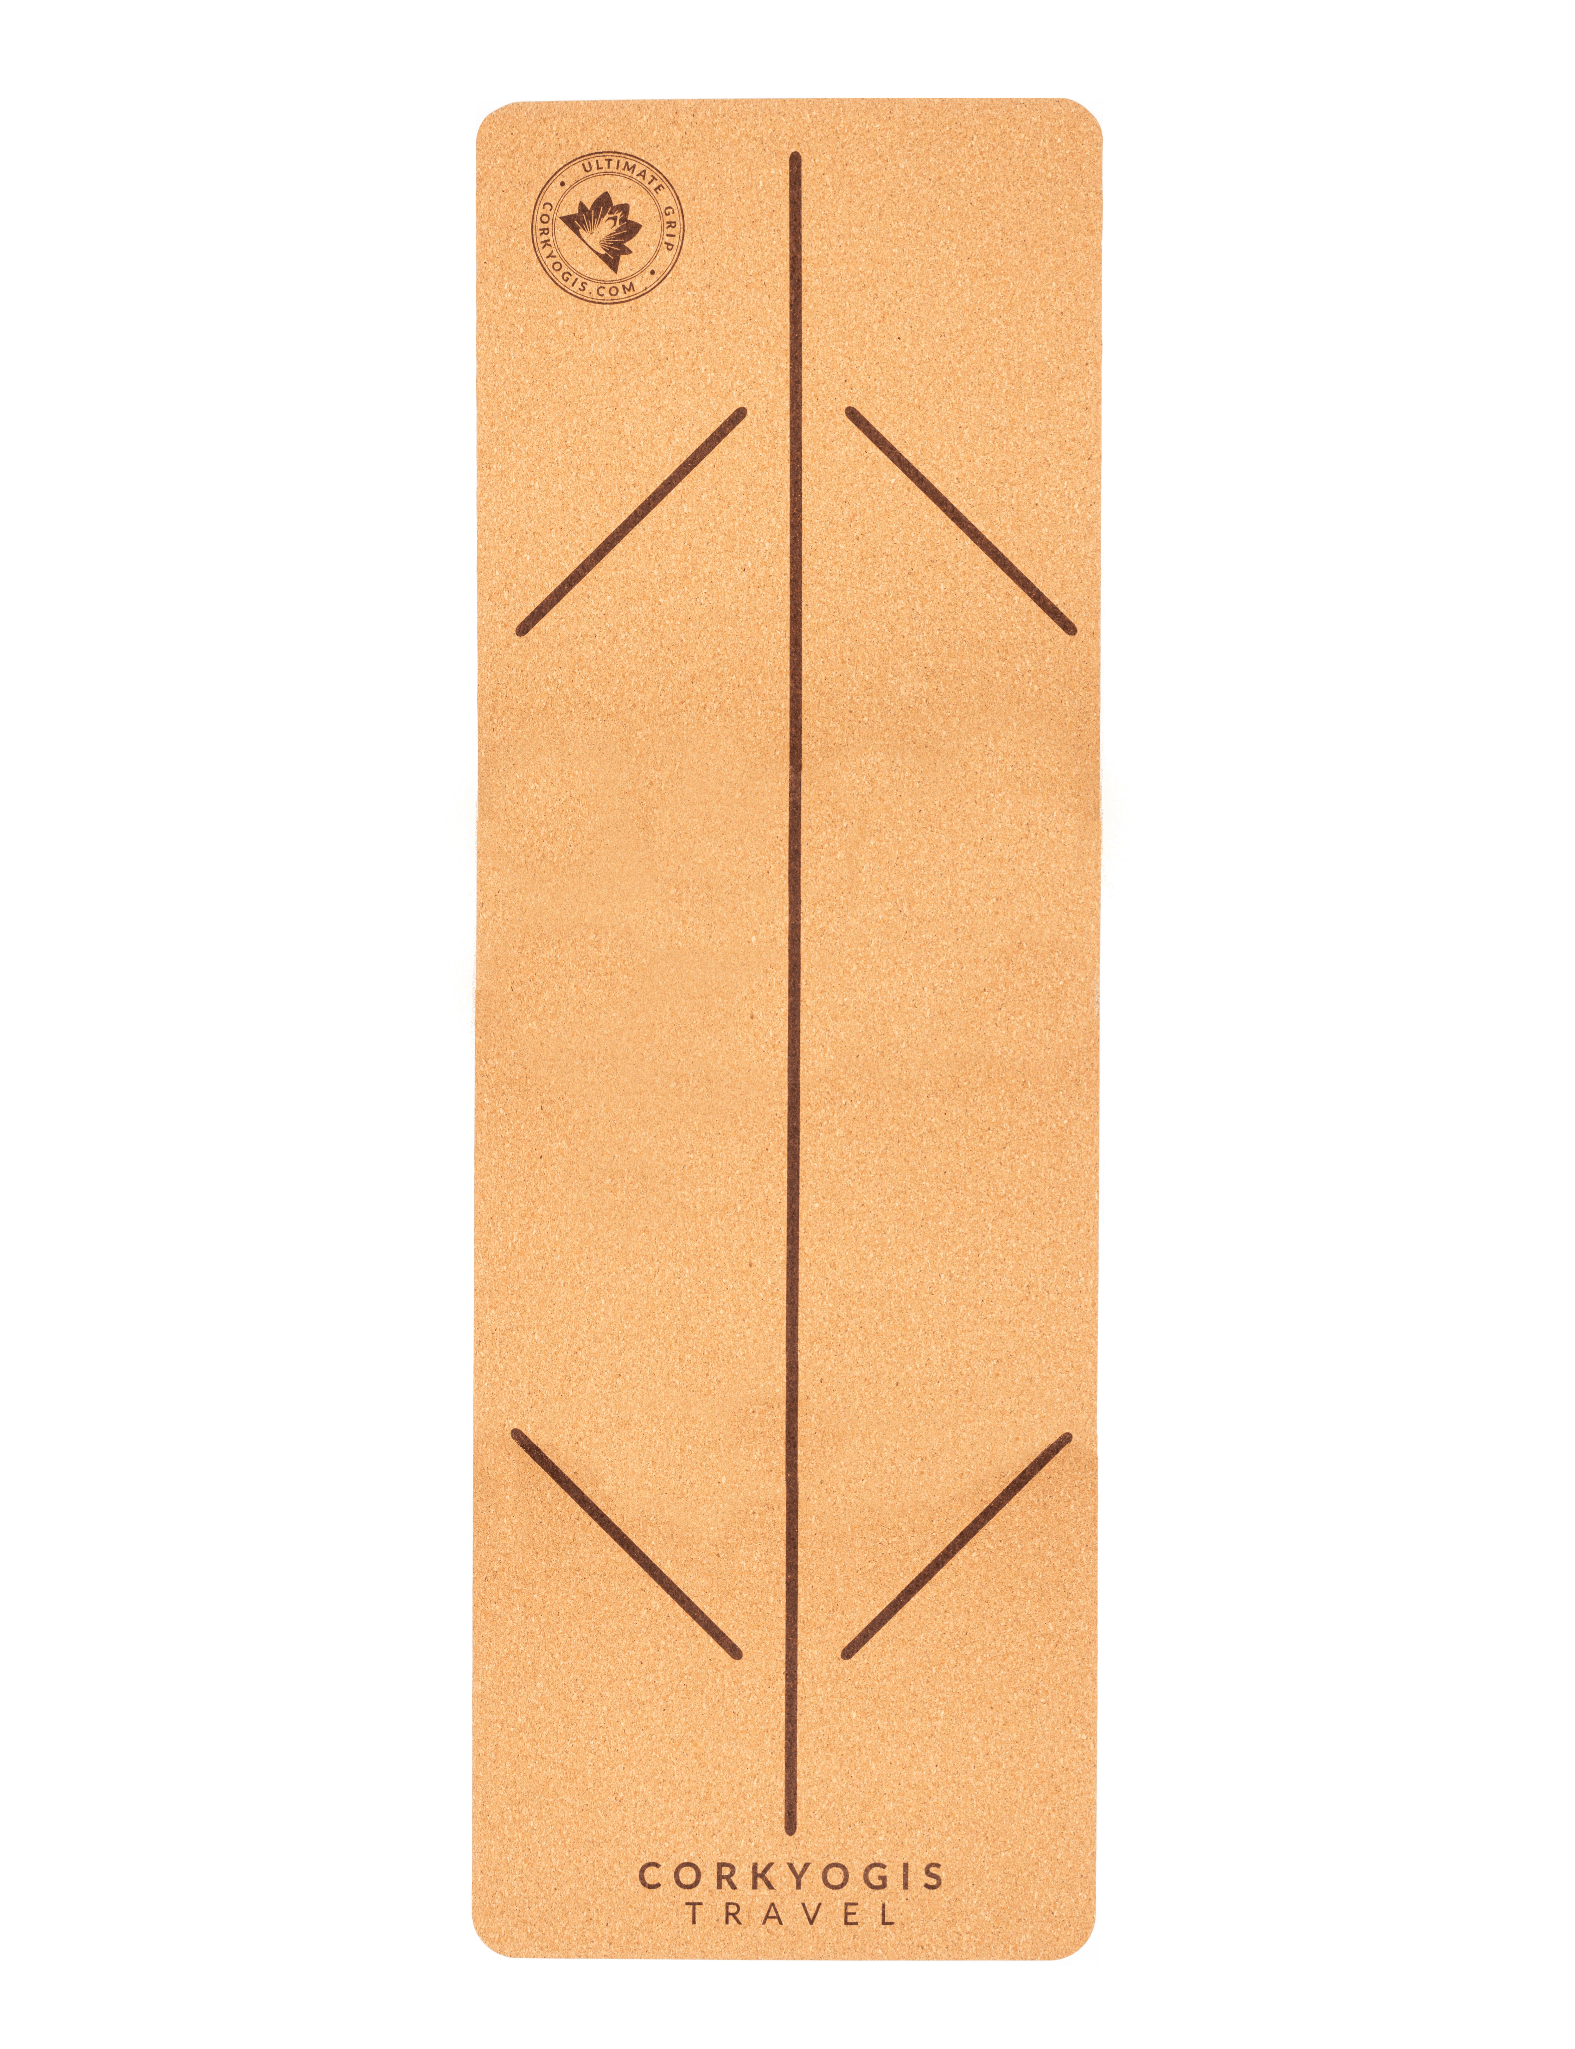 travel cork yoga mat position lines